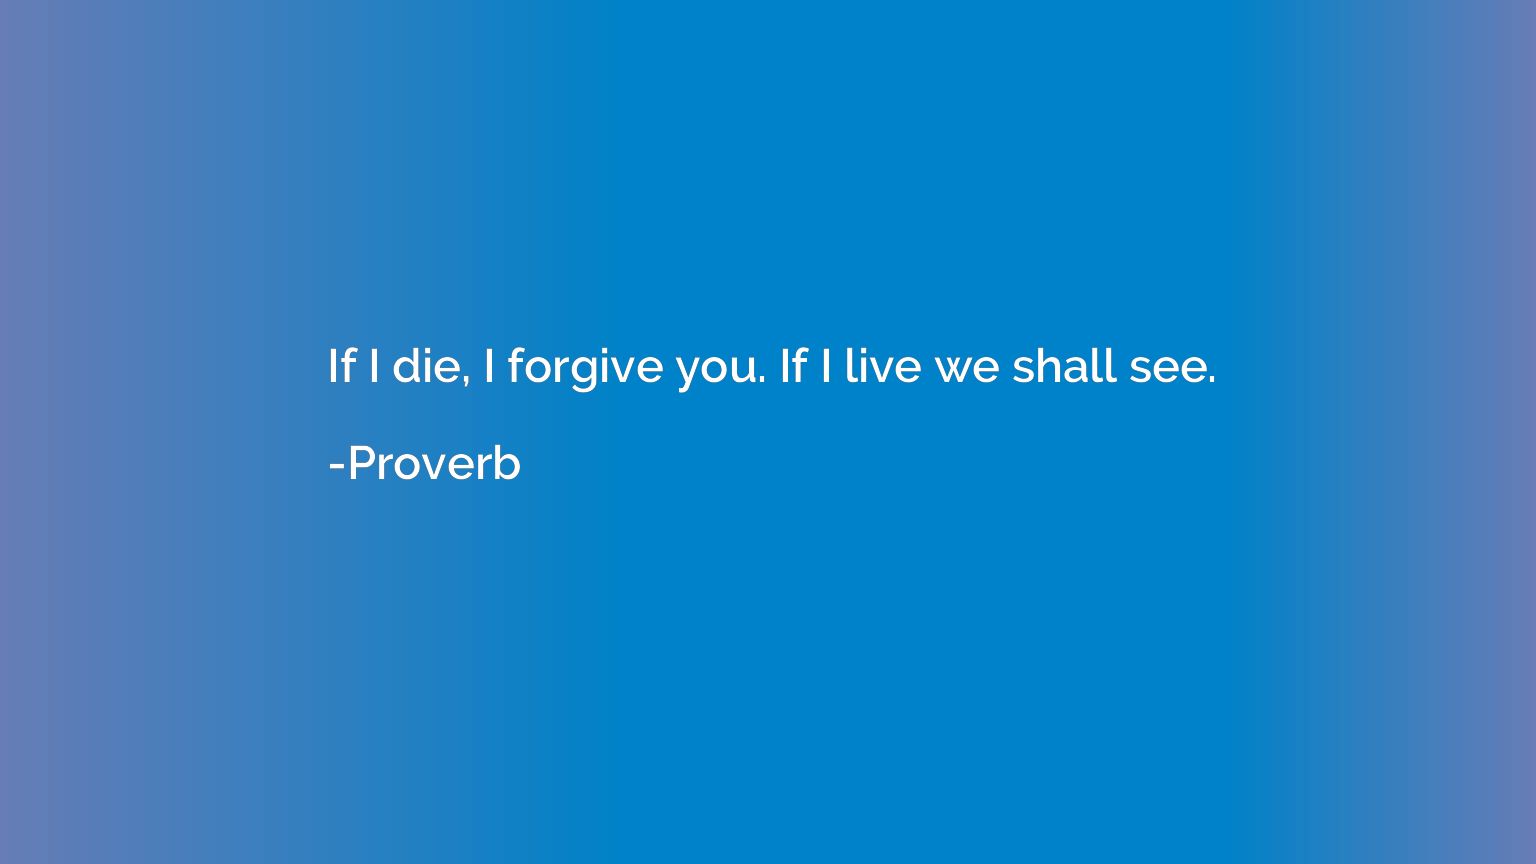 If I die, I forgive you. If I live we shall see.